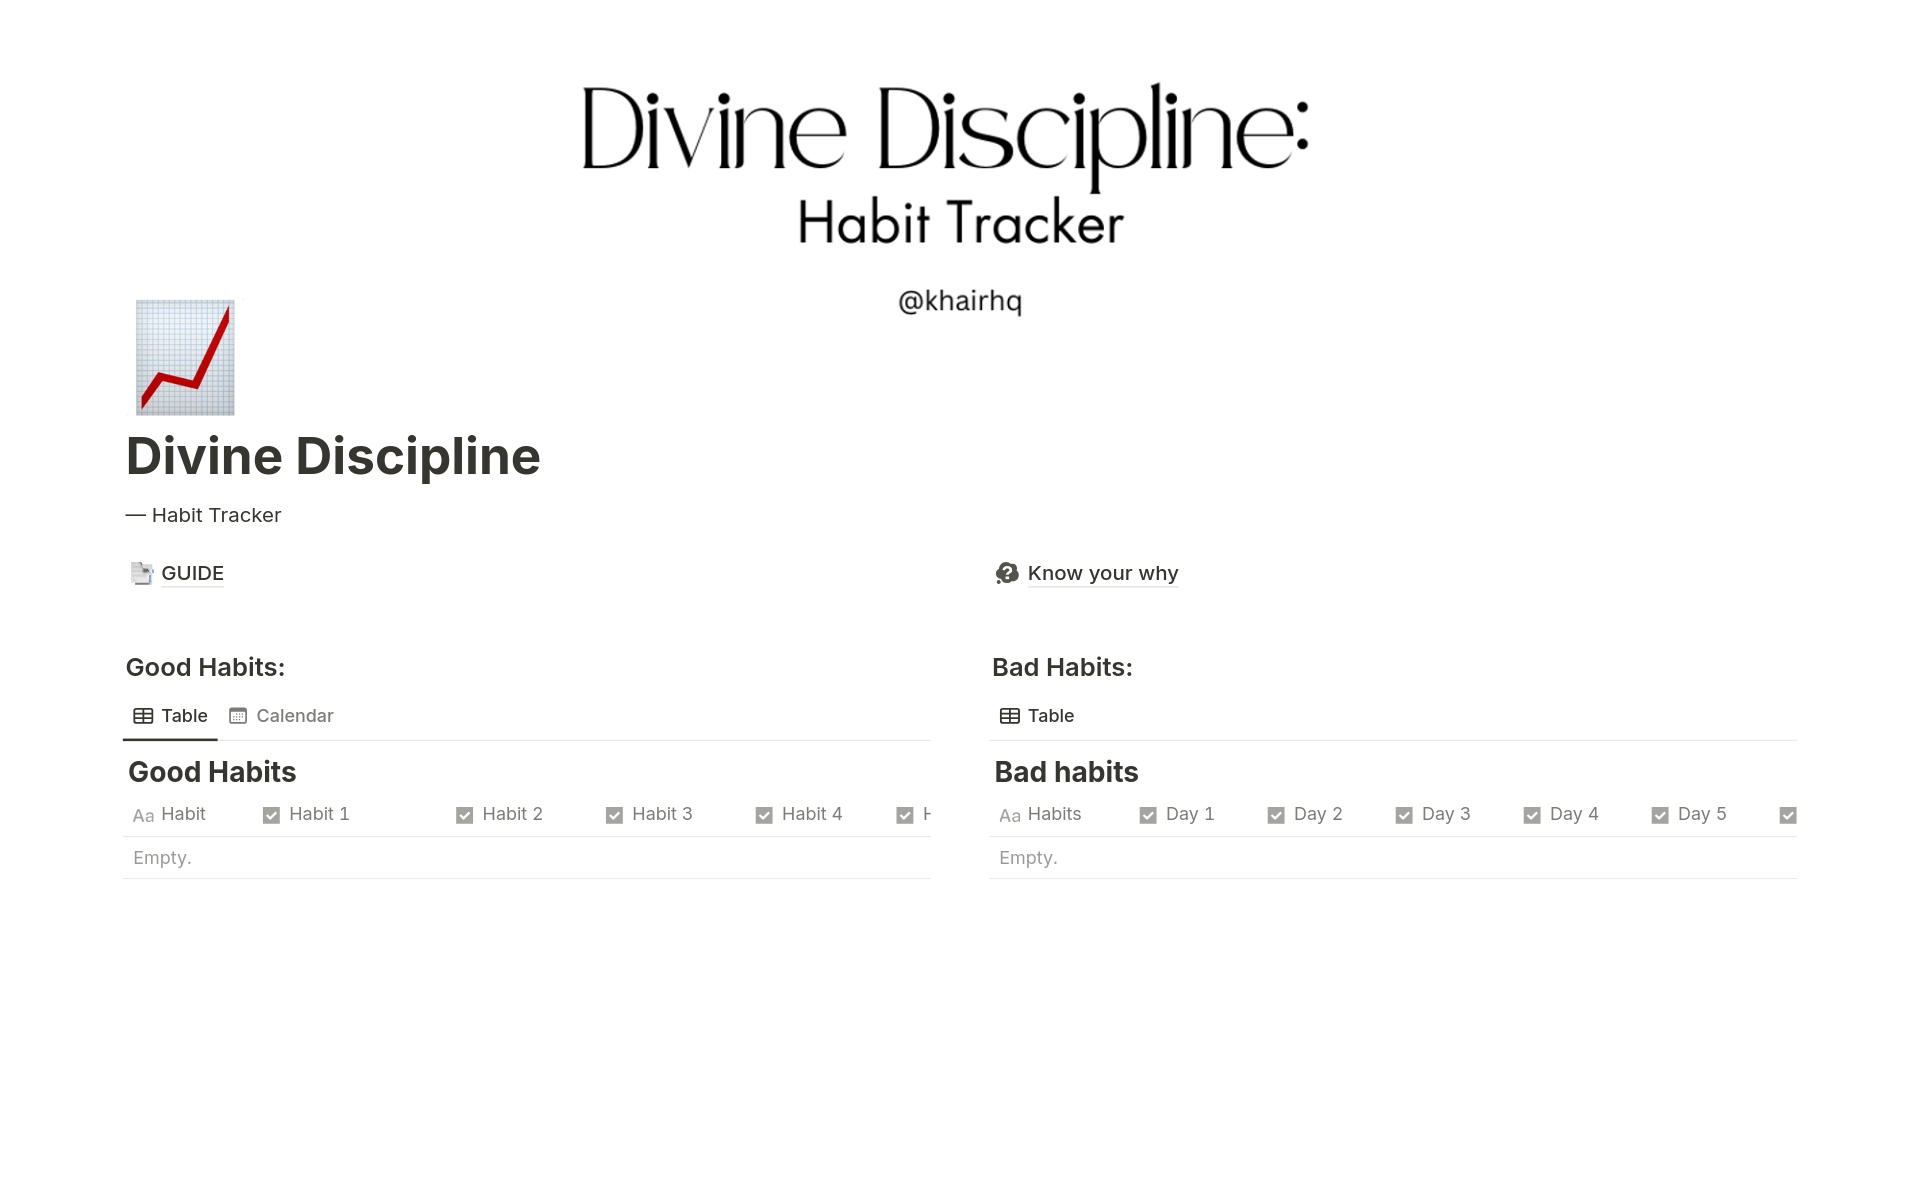 Aperçu du modèle de Divine Discipline